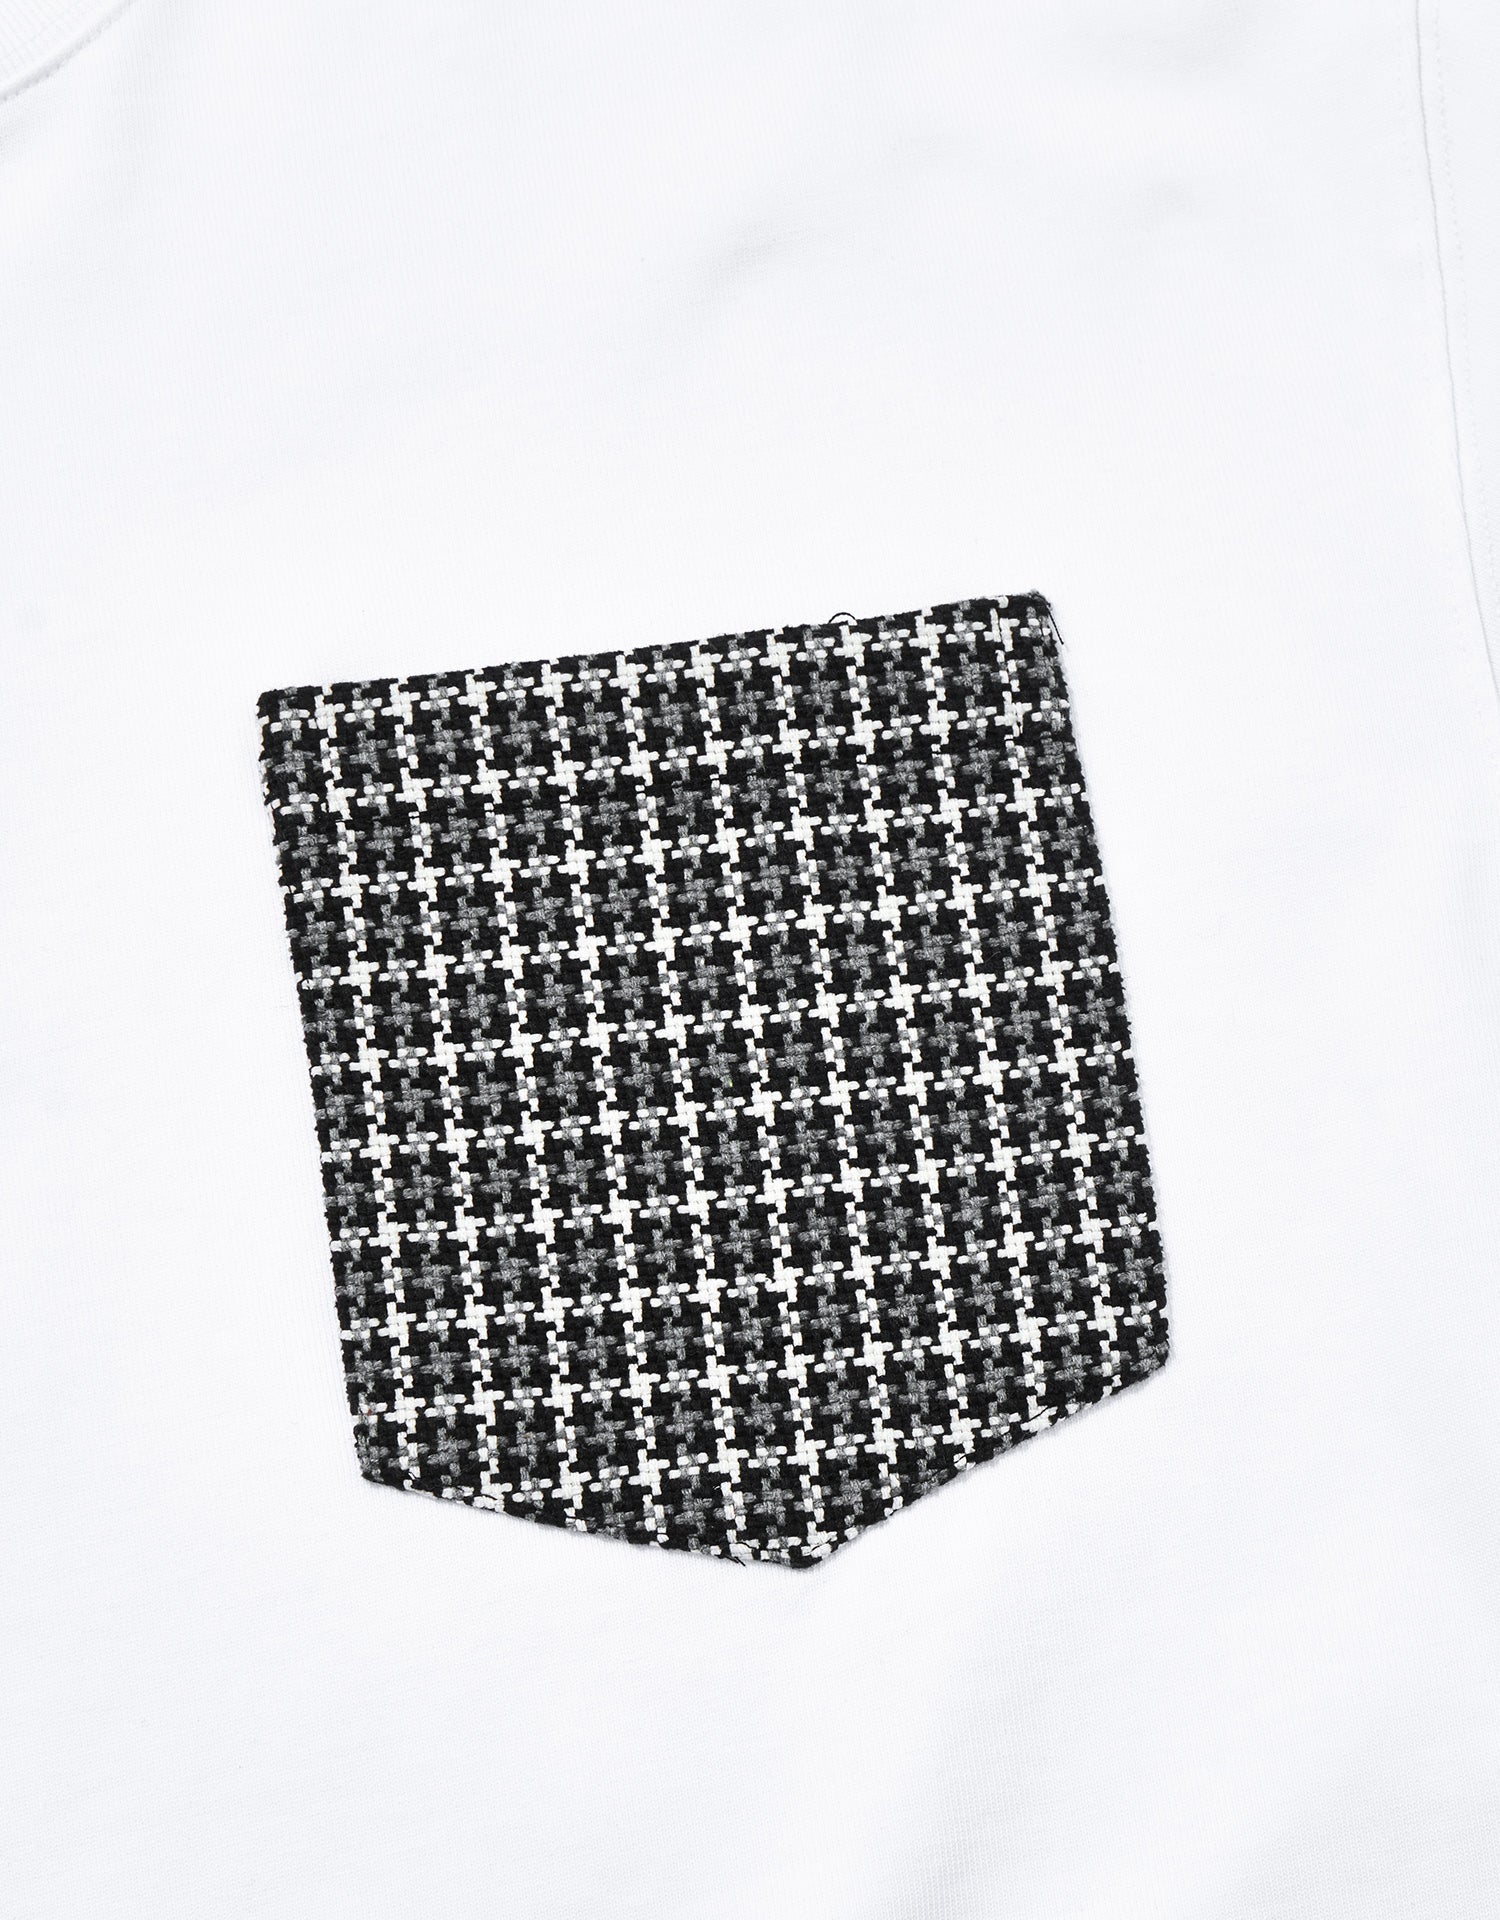 TopBasics Oversized Checked Pocket T-Shirt